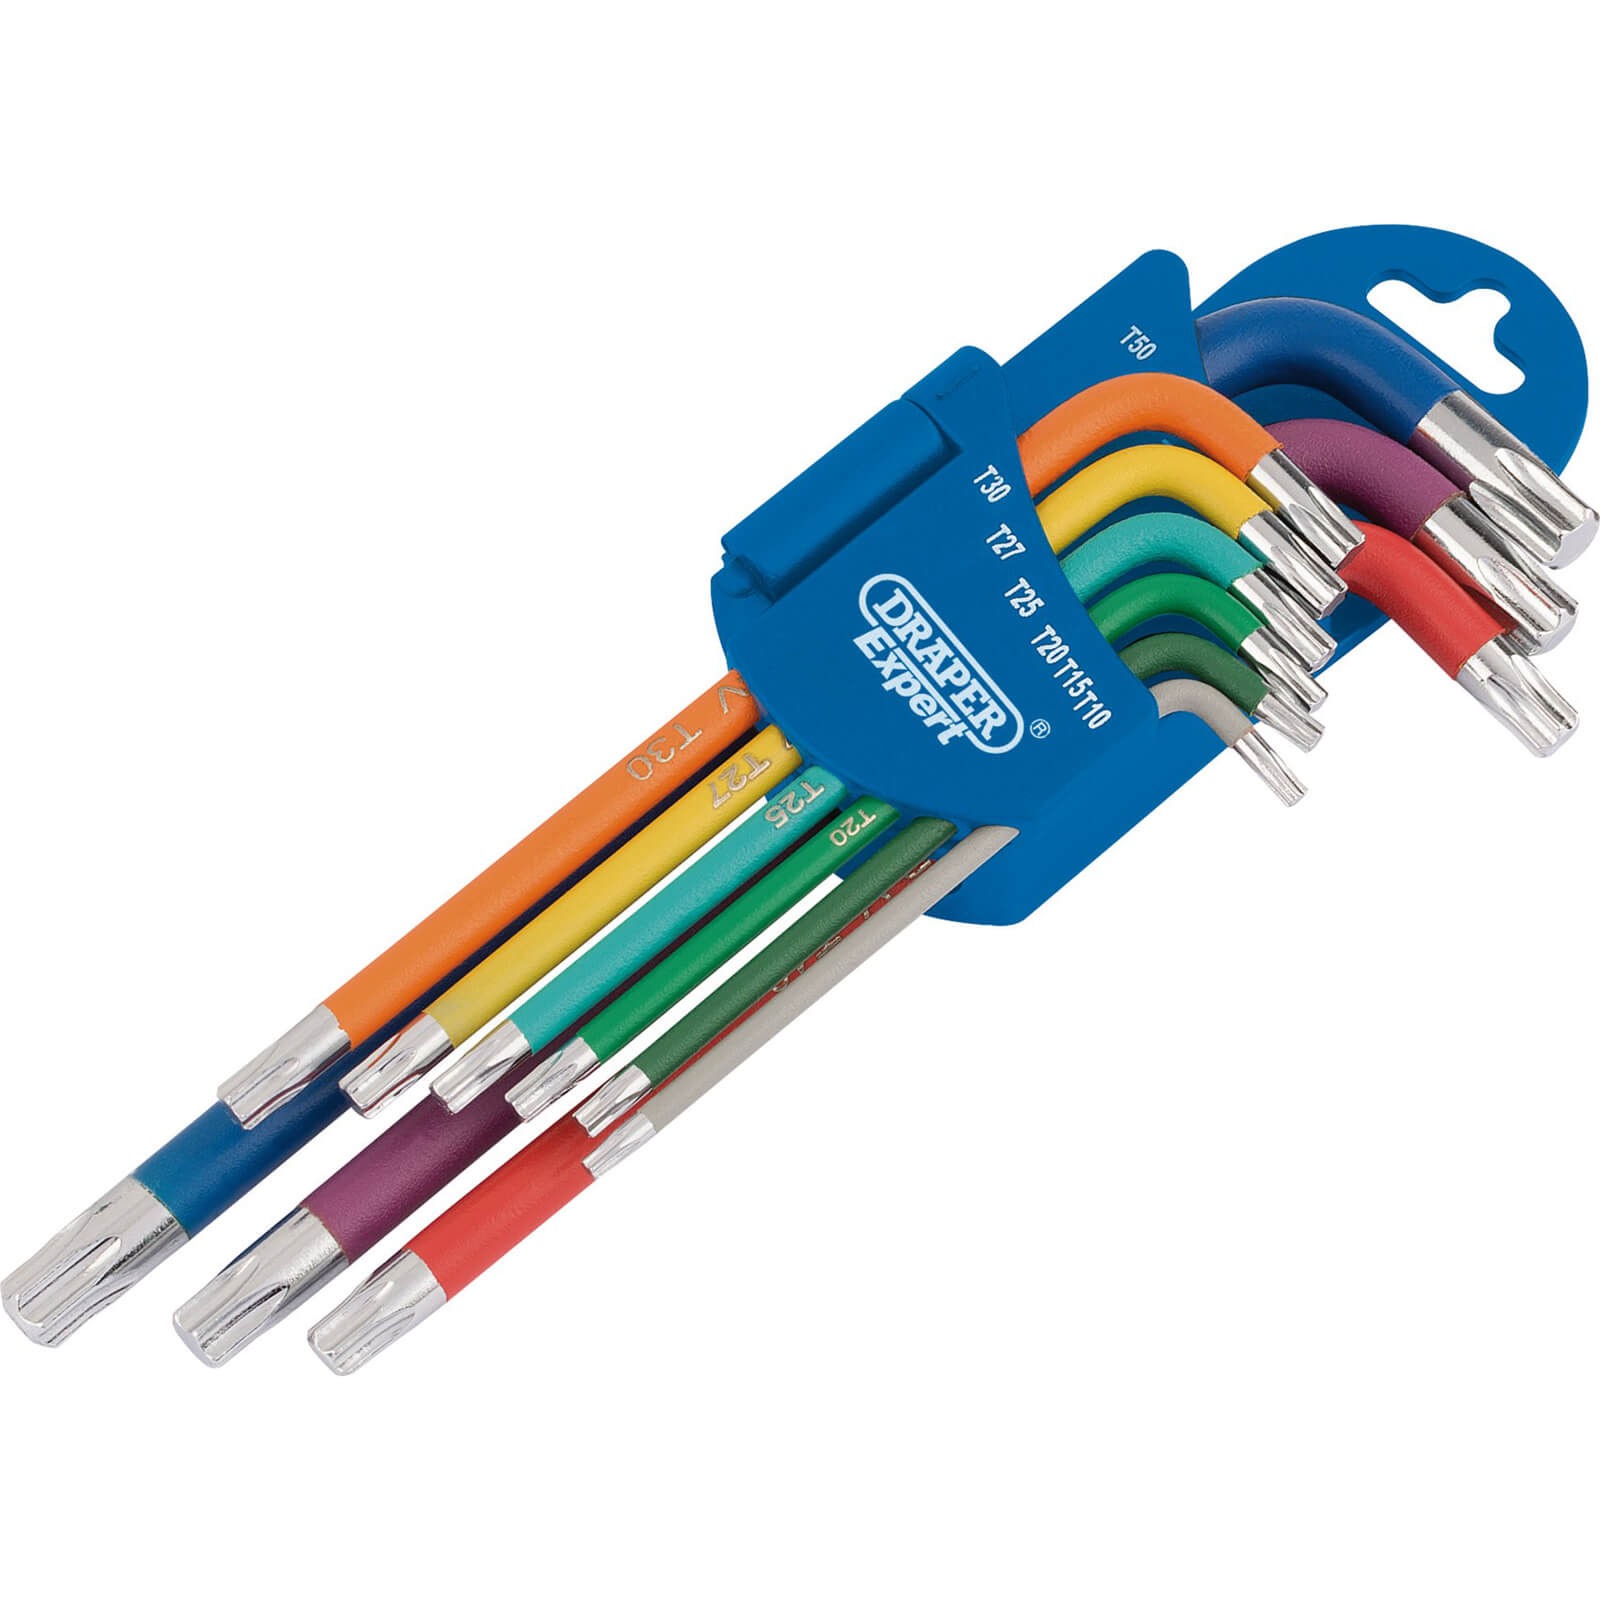 Image of Draper 9 piece Metric Coloured Extra Long Torx Key Set